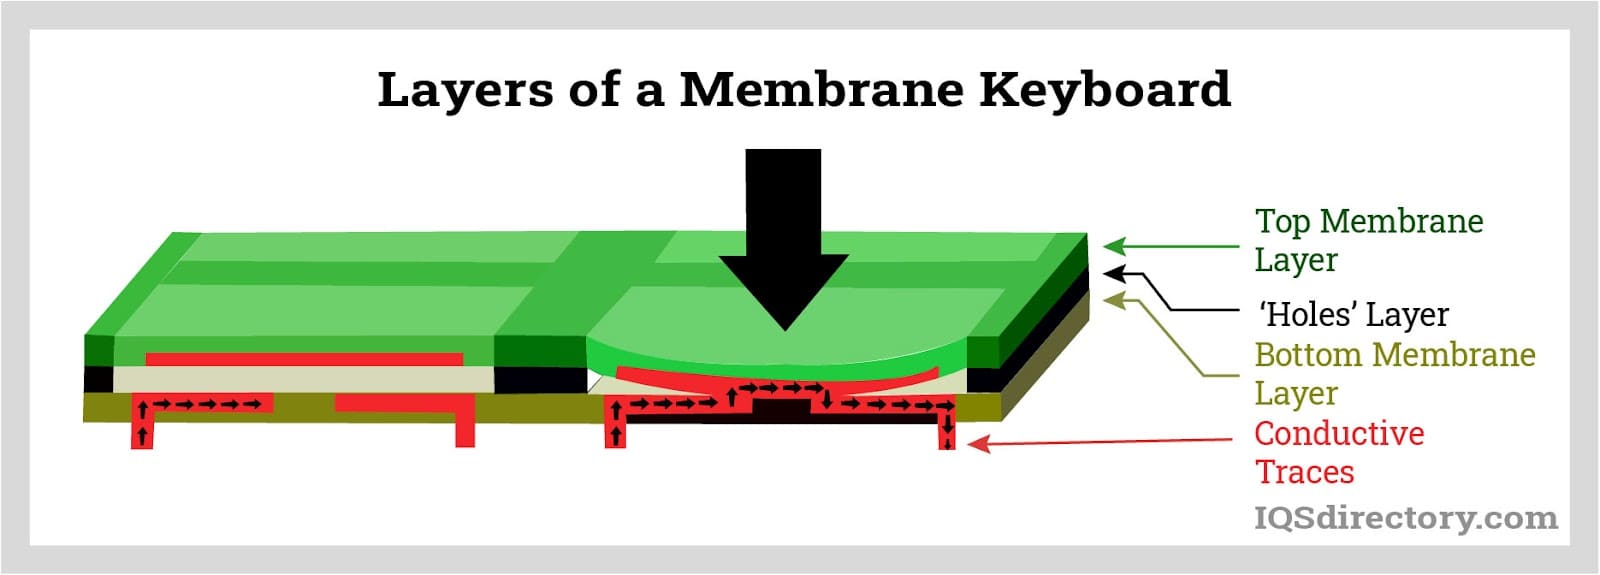 Layers of a Membrane Keyboard